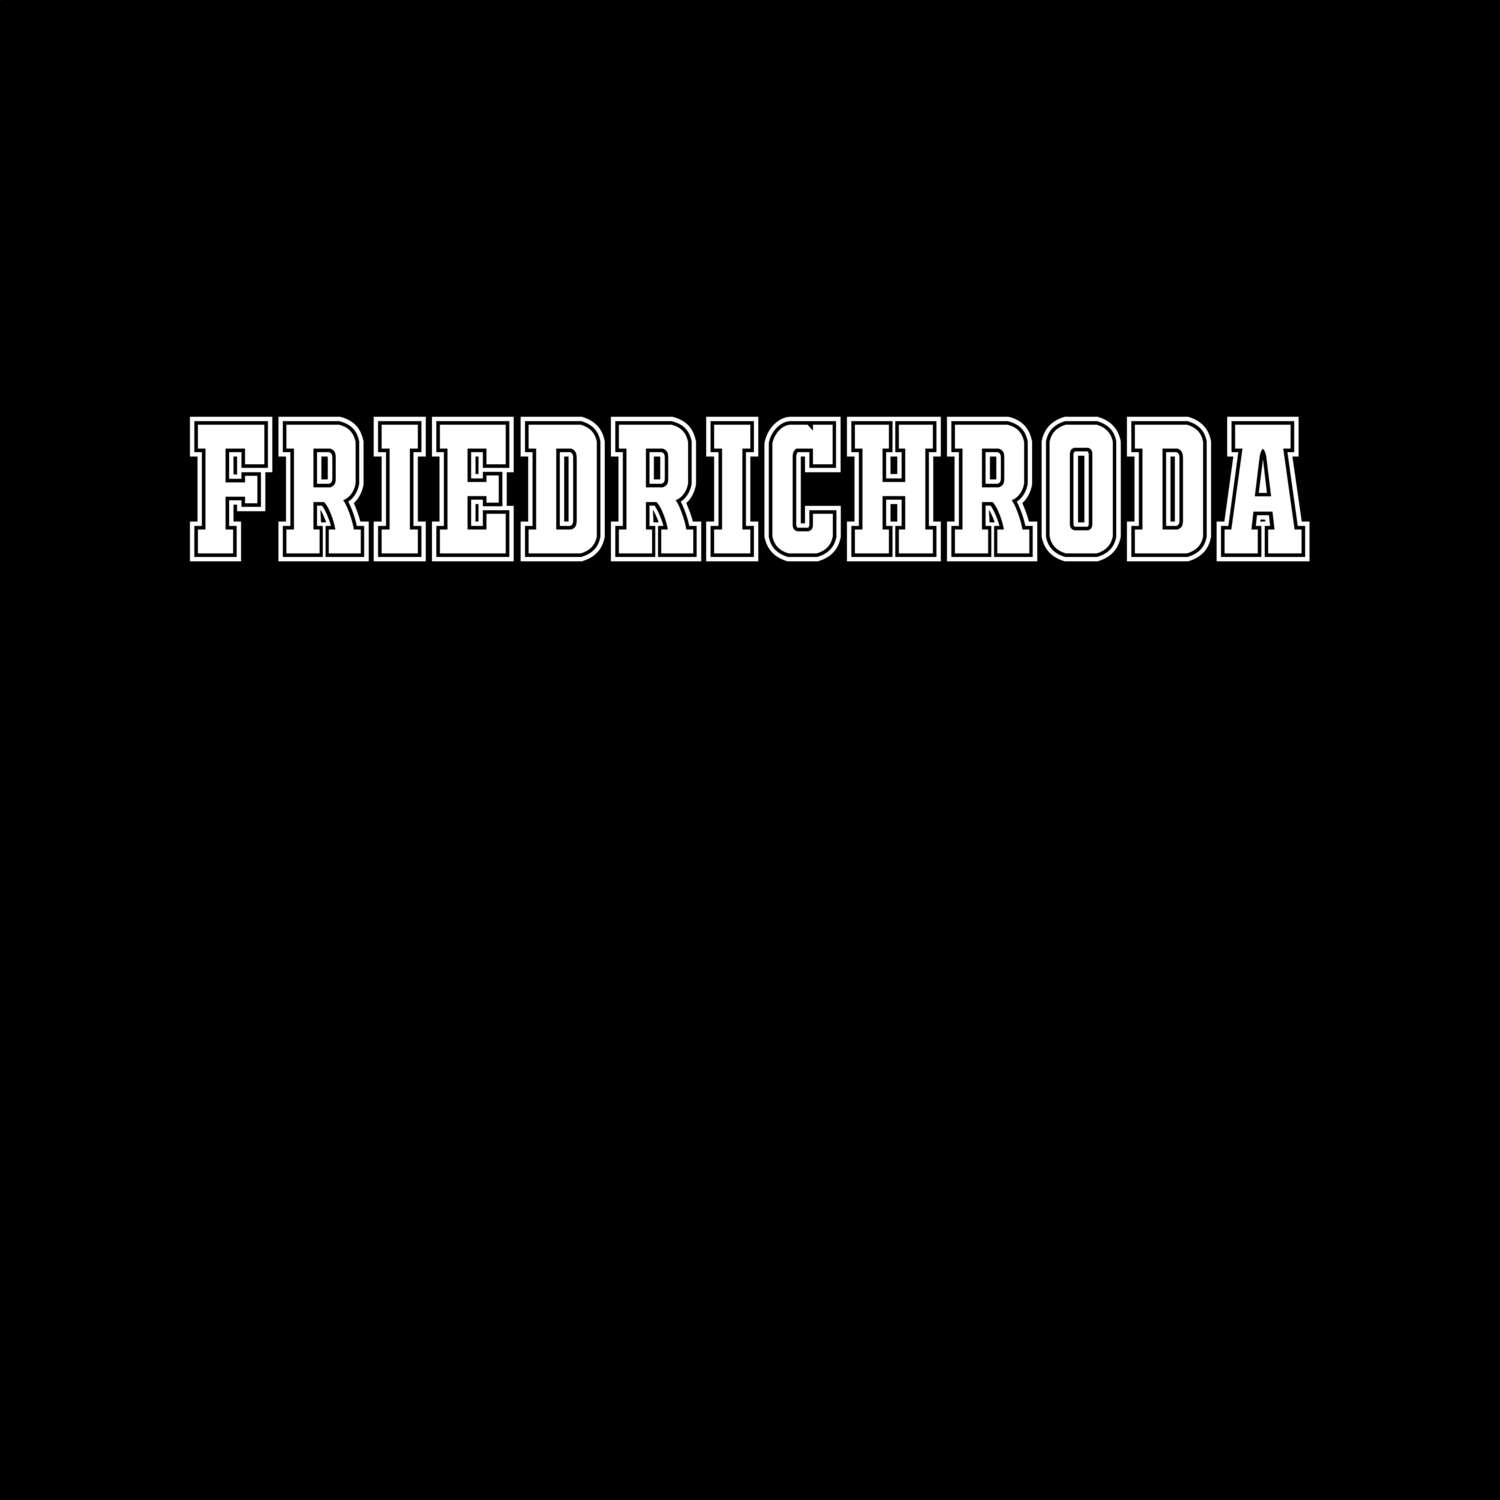 Friedrichroda T-Shirt »Classic«